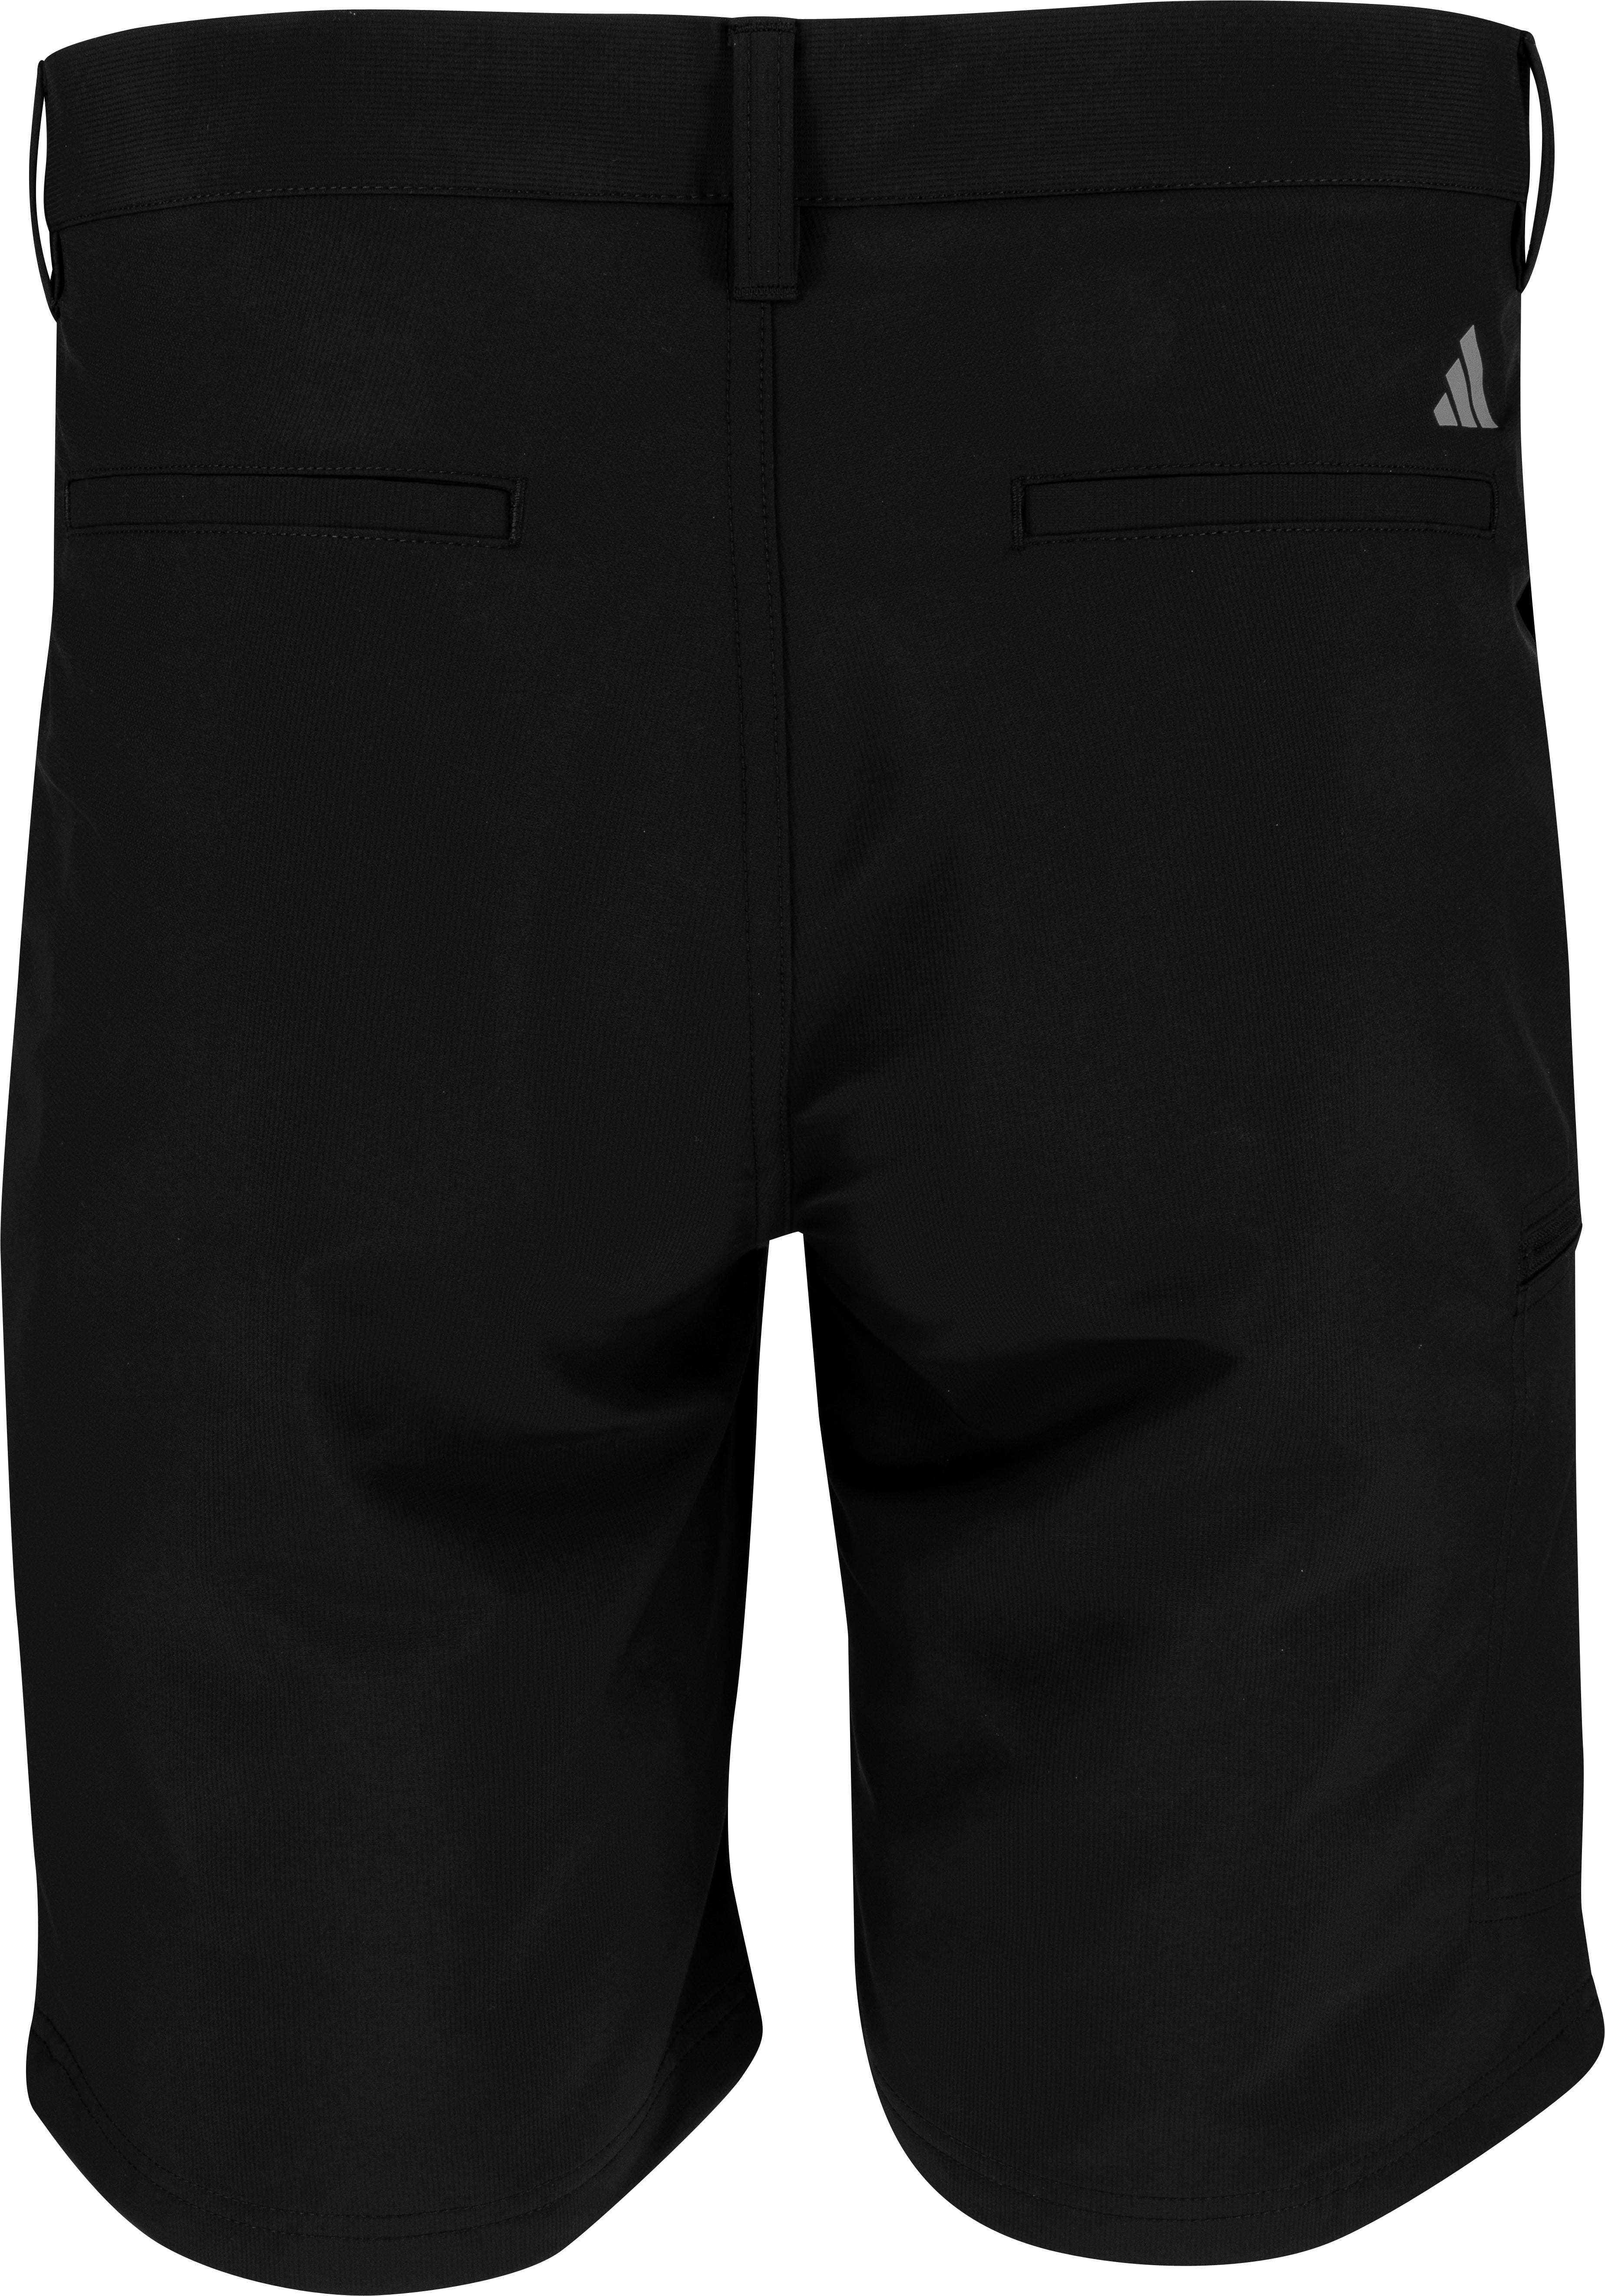 Adidas 9 Inch Golf Shorts Men Choose Size - Walmart.com